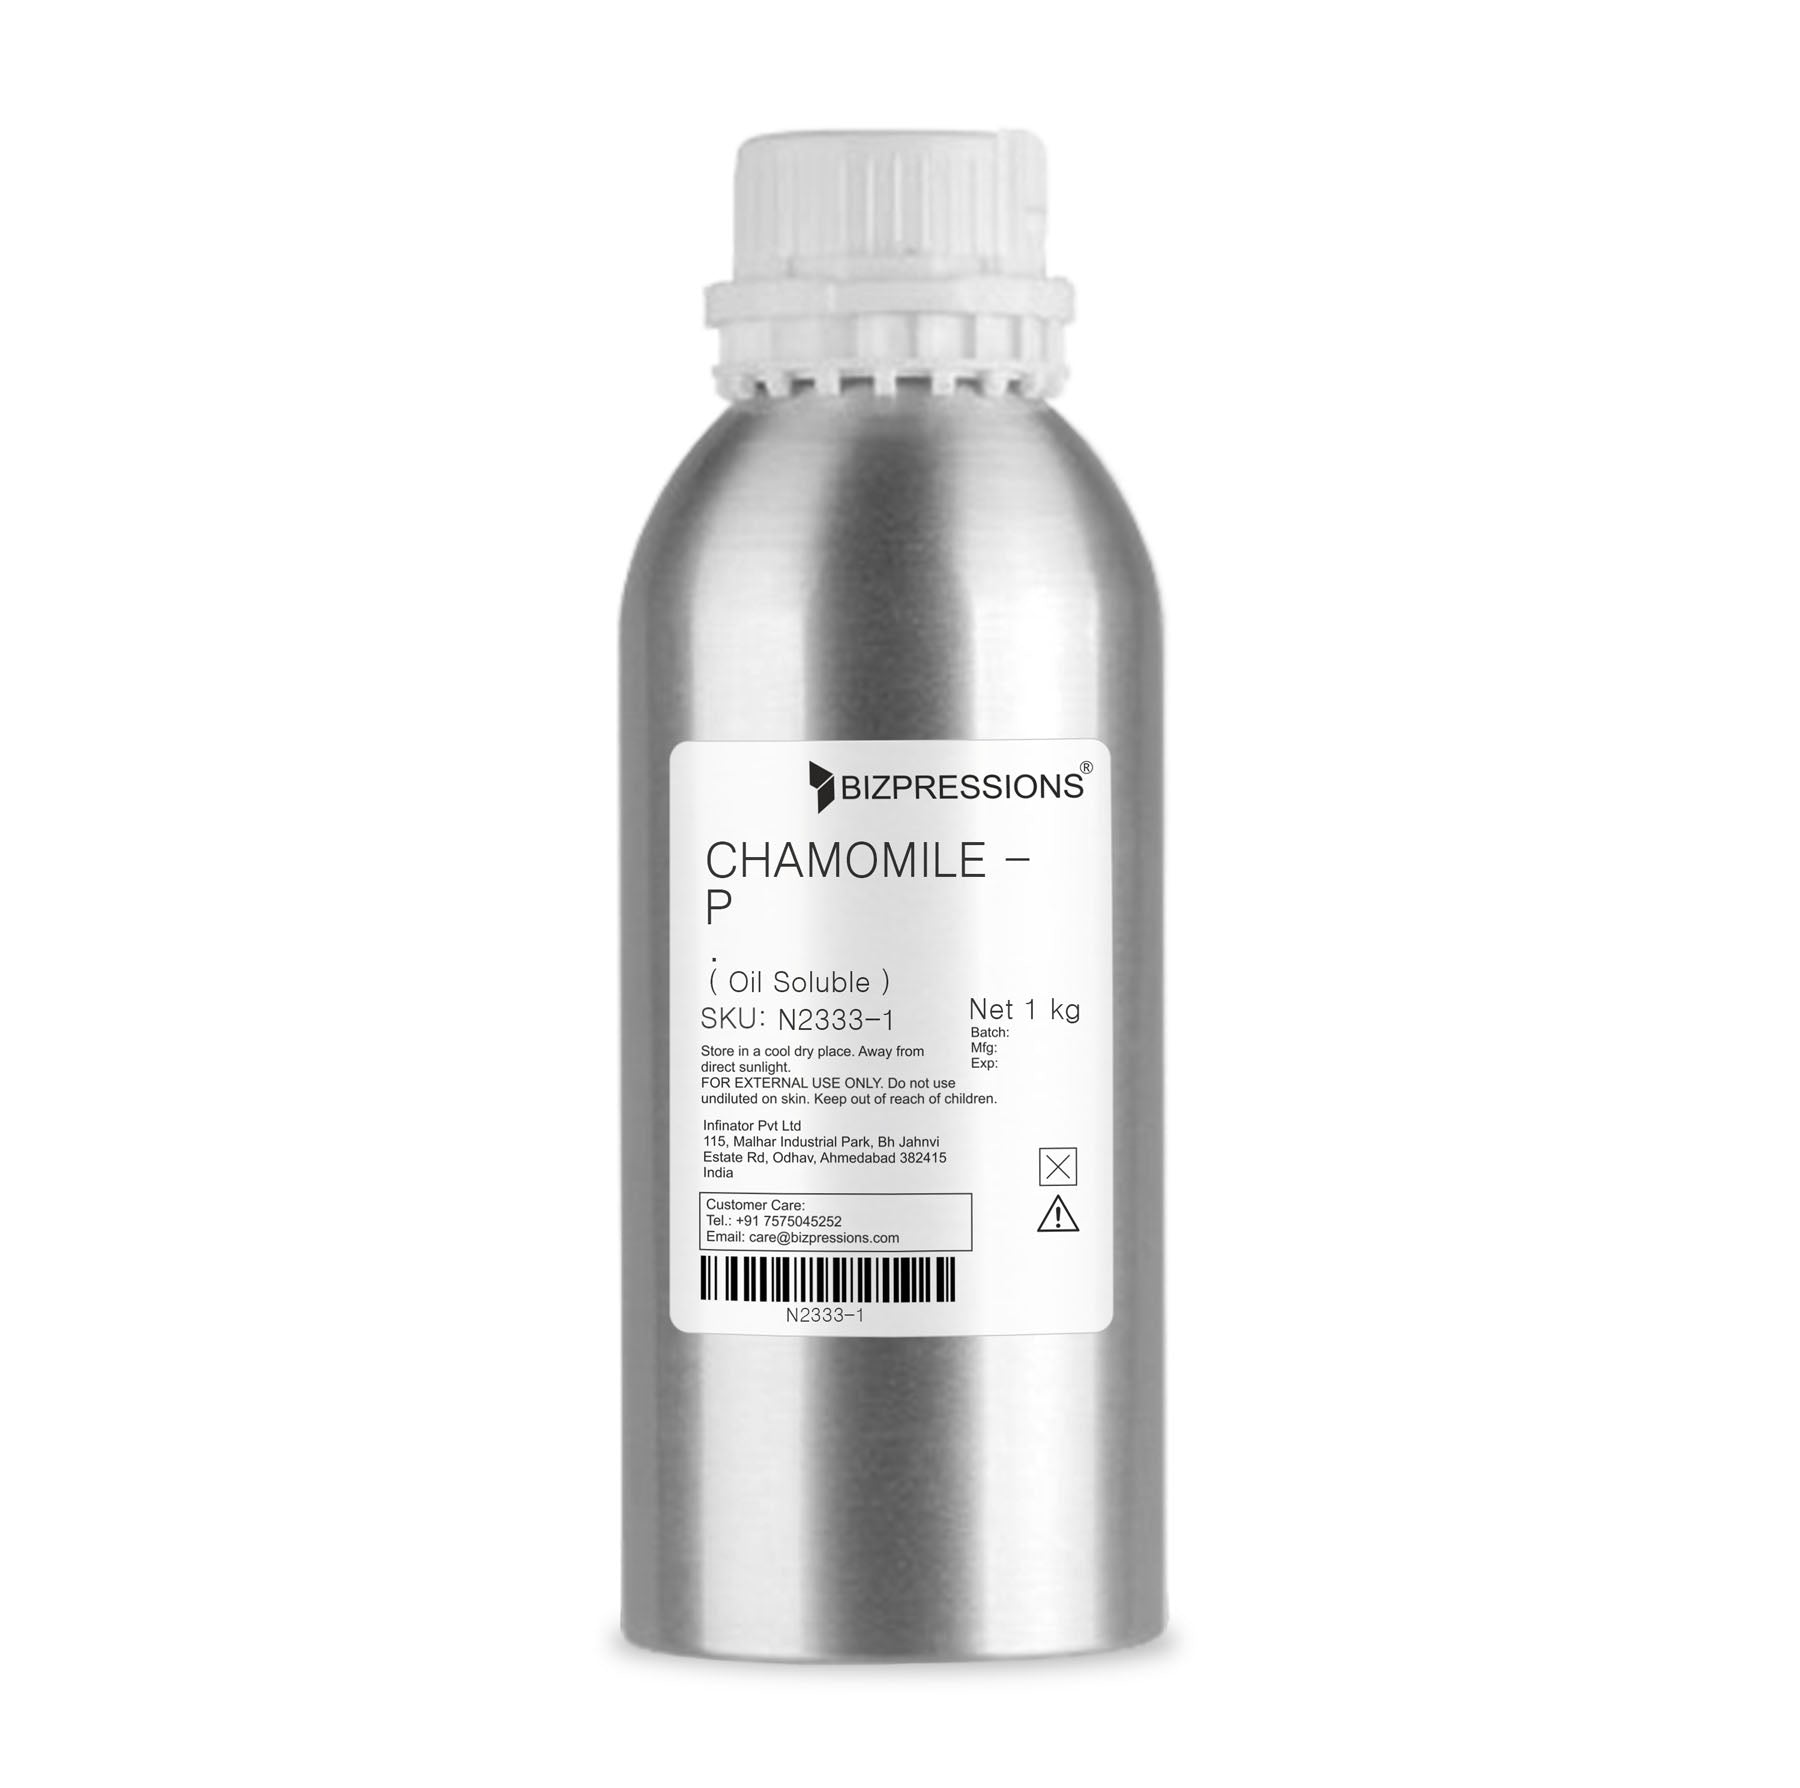 CHAMOMILE - P - Fragrance ( Oil Soluble ) - 1 kg